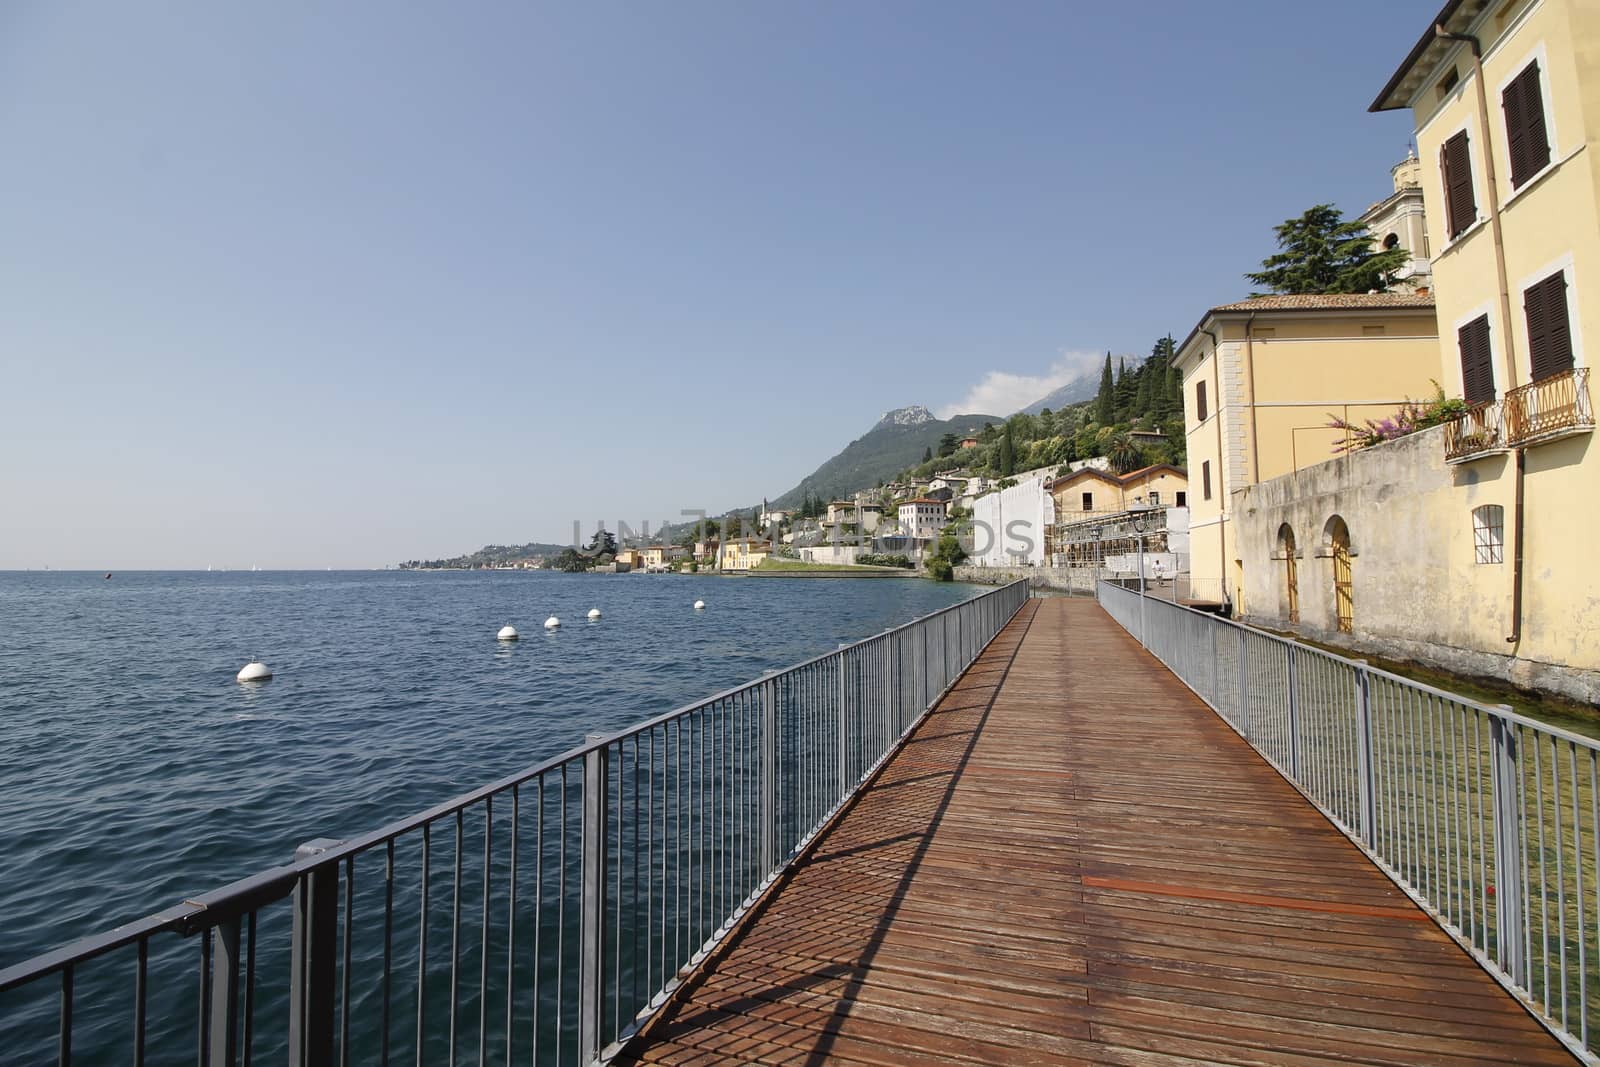 Wooden promenade in Gargnano, on Garda lake in northern Italy